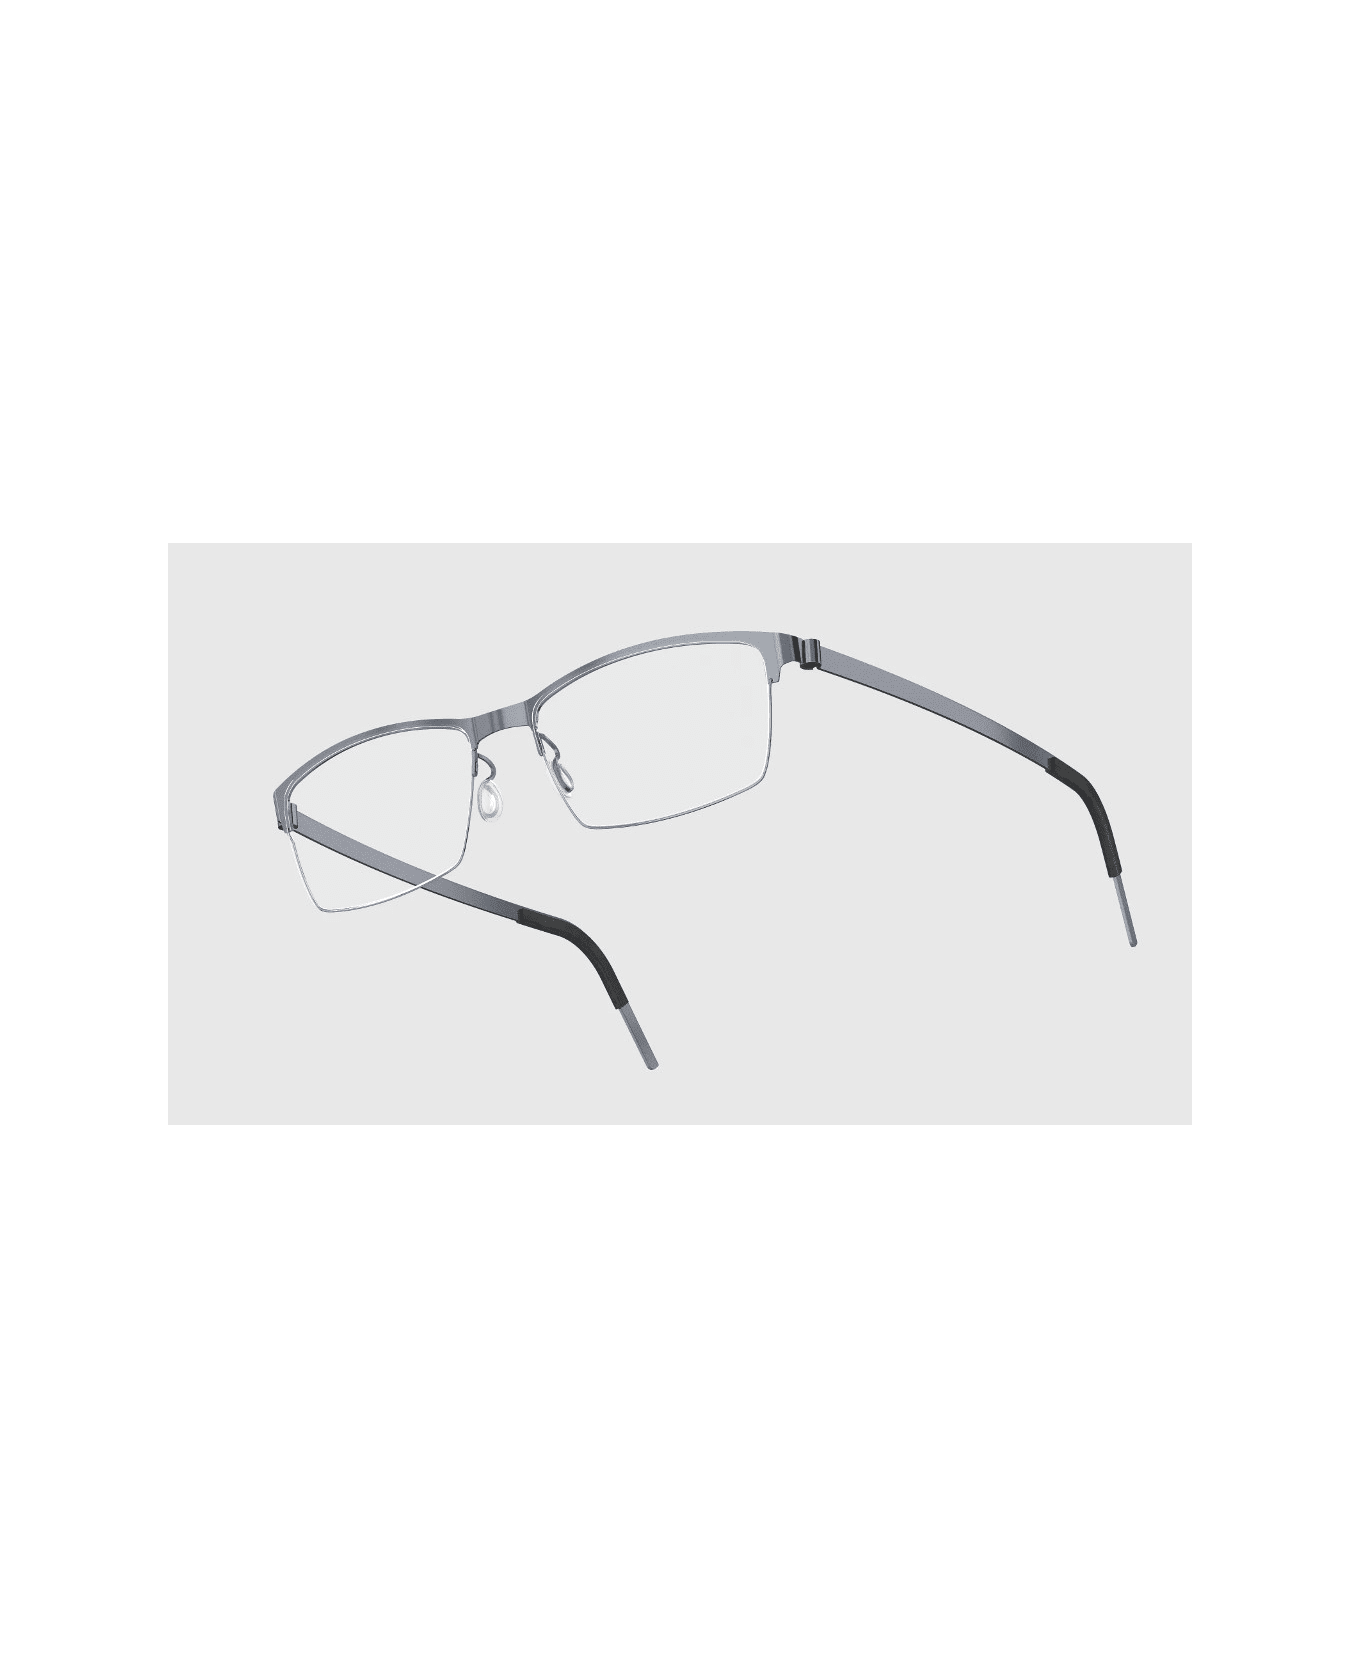 LINDBERG strip 7406 U16 Glasses